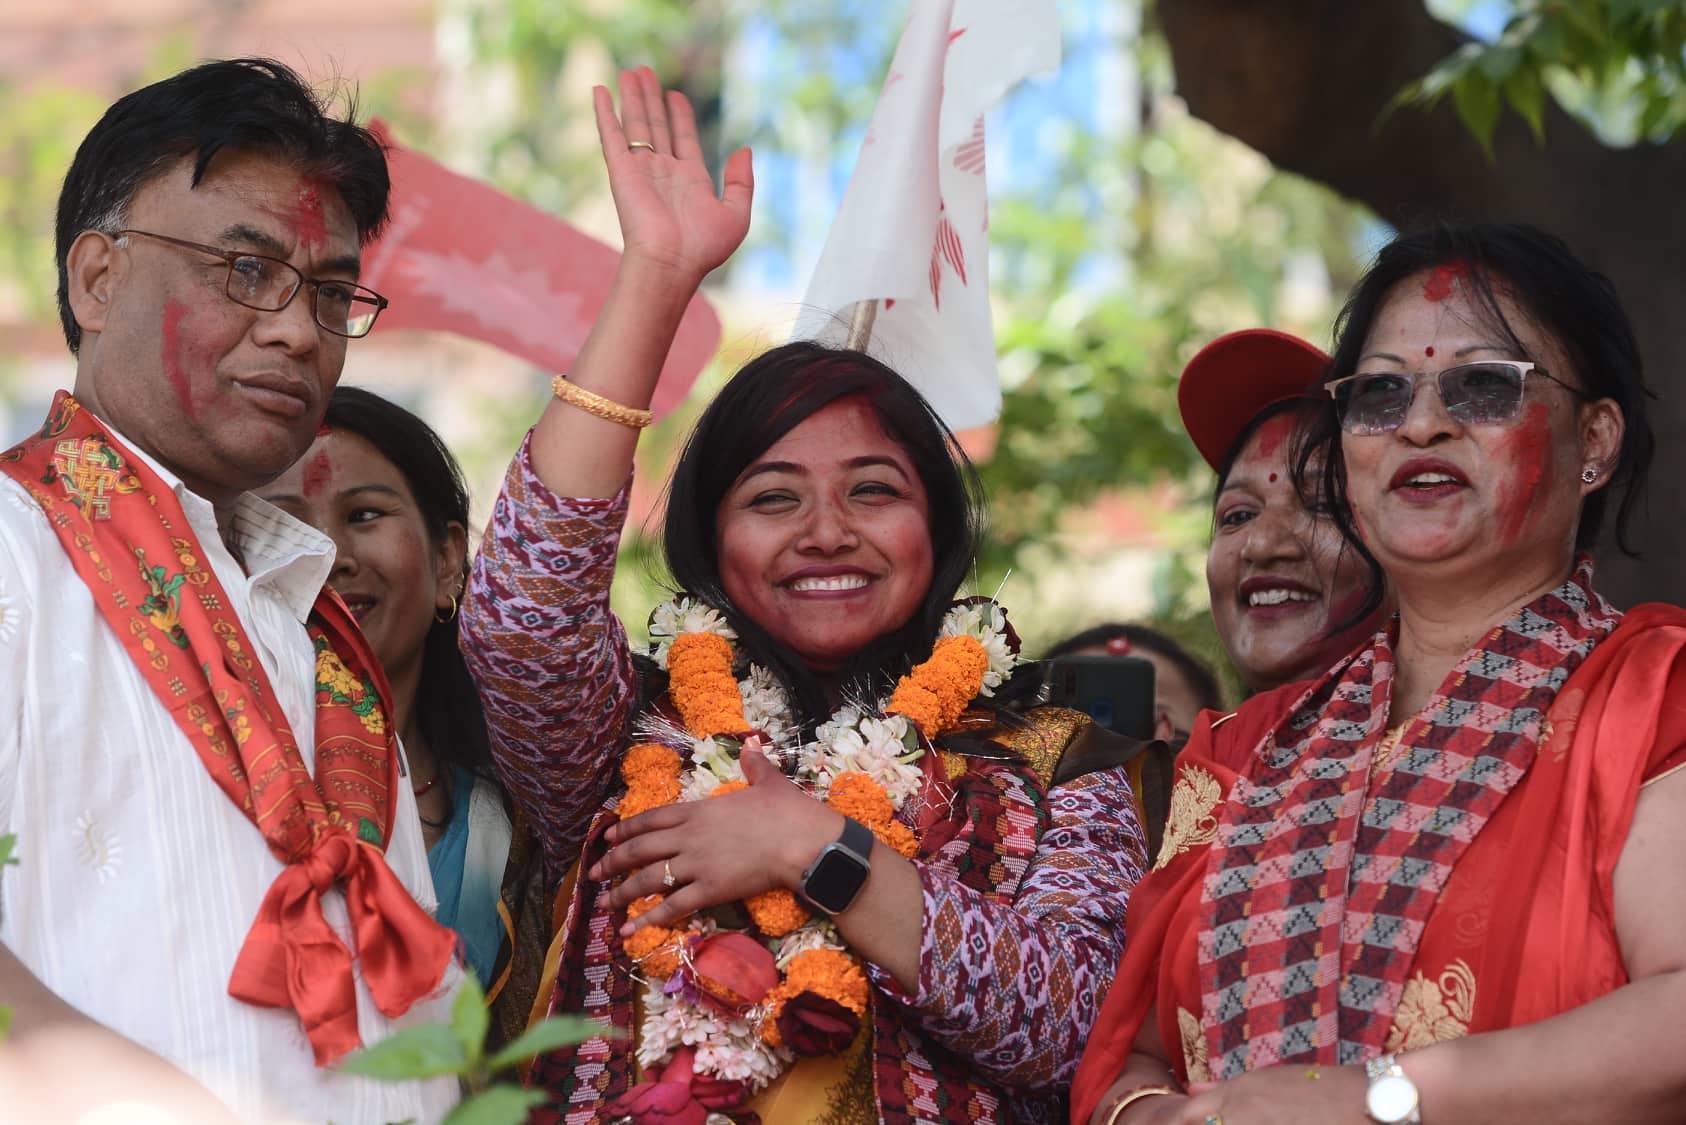 काठमार्डौ महानगरको उपप्रमुख जितेपछि सुनिता डंगोलको विजय उत्सव 